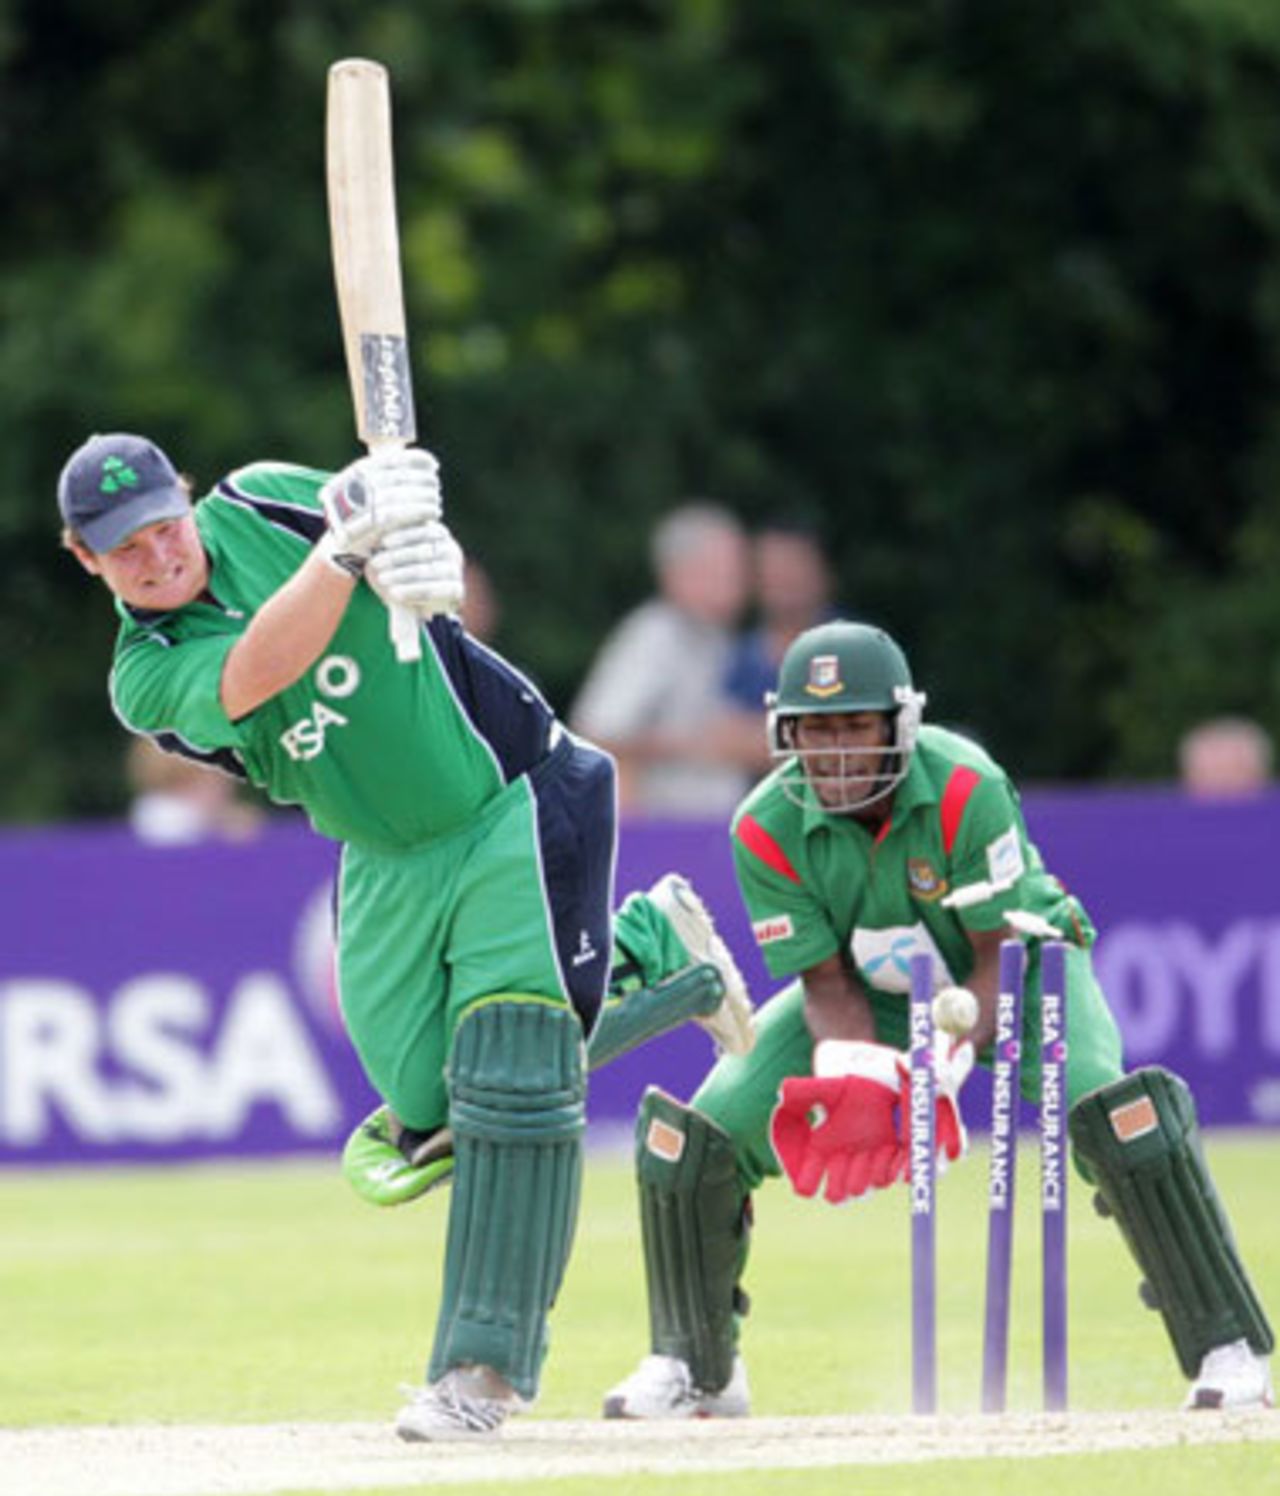 Ireland's Paul Stirling is bowled for 52, Ireland v Bangladesh, 1st ODI, Belfast, July 15, 2010